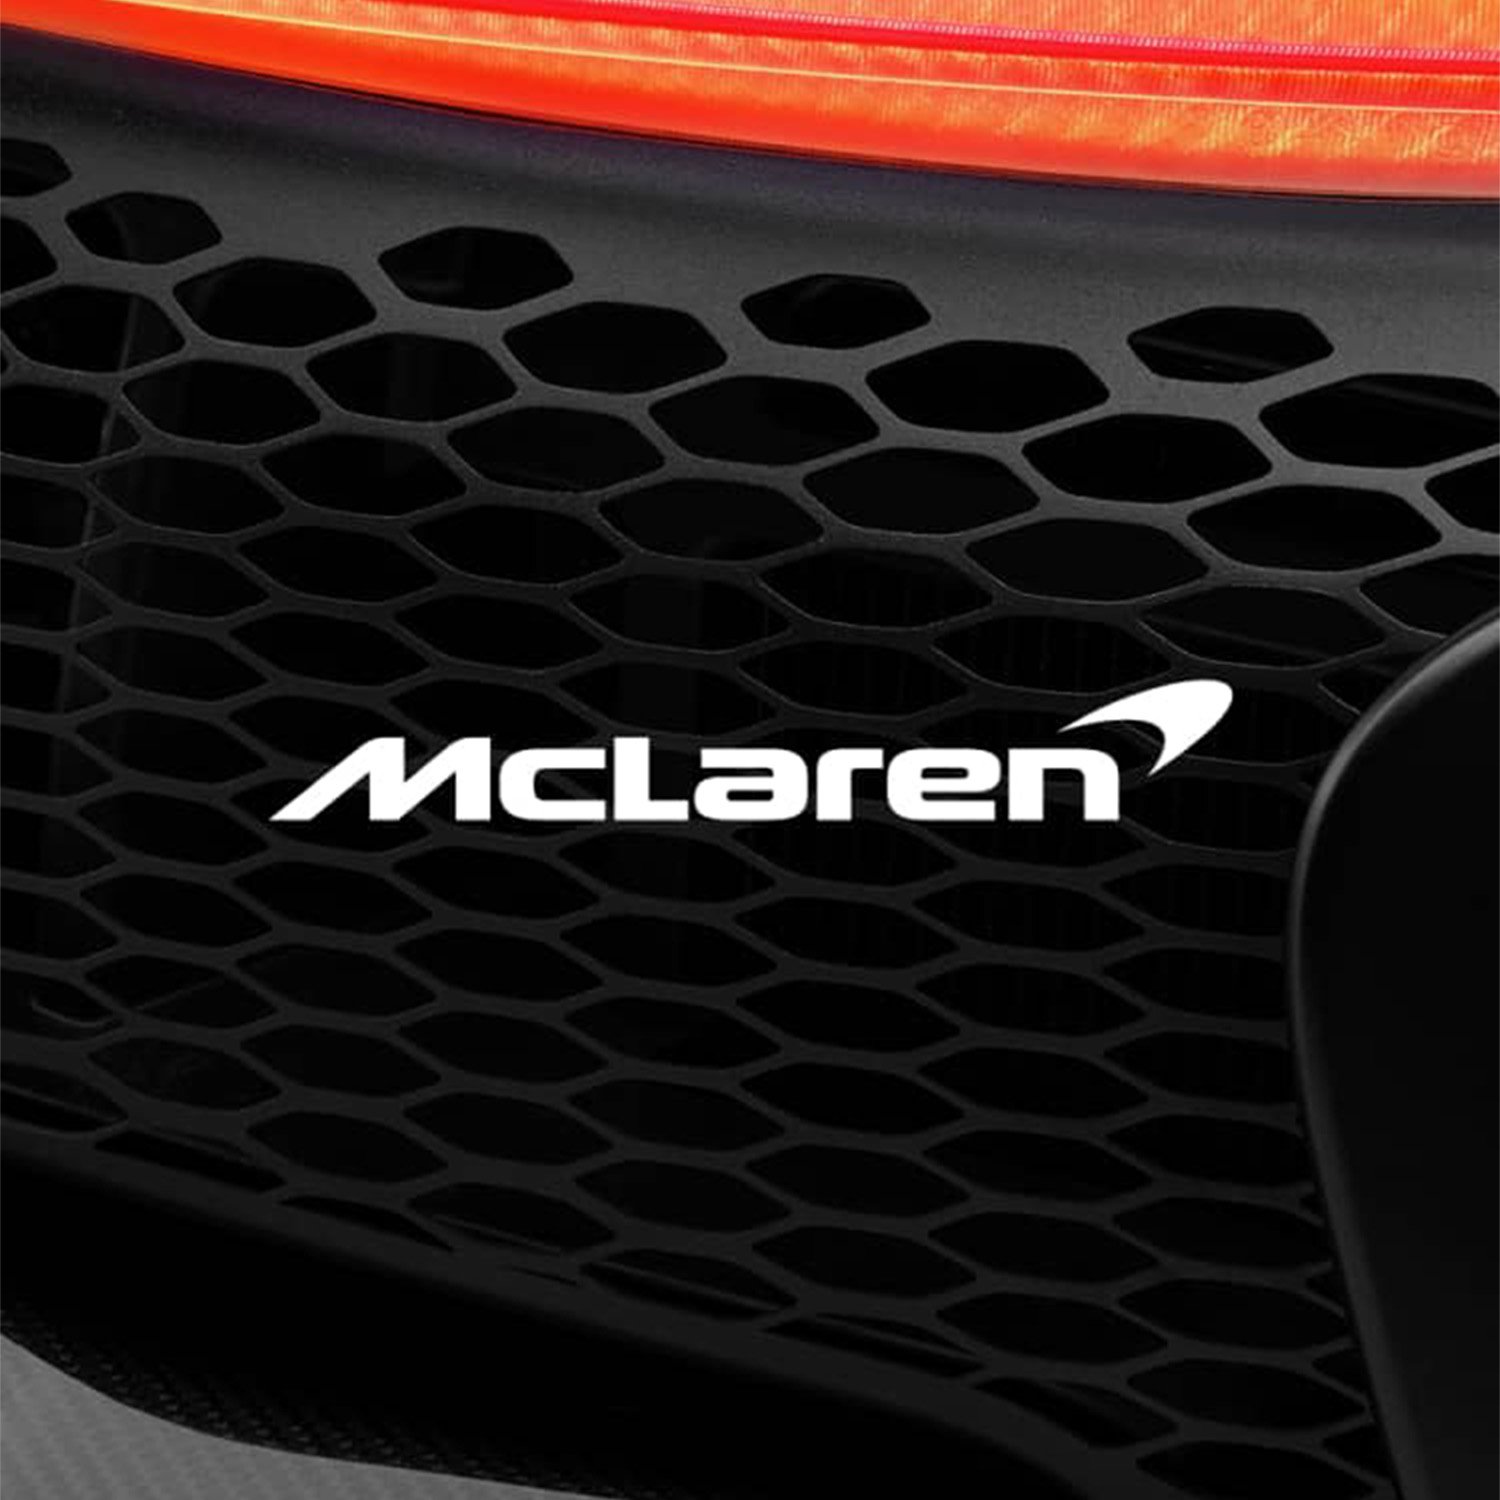 Px8 McLaren Edition | Bowers & Wilkins